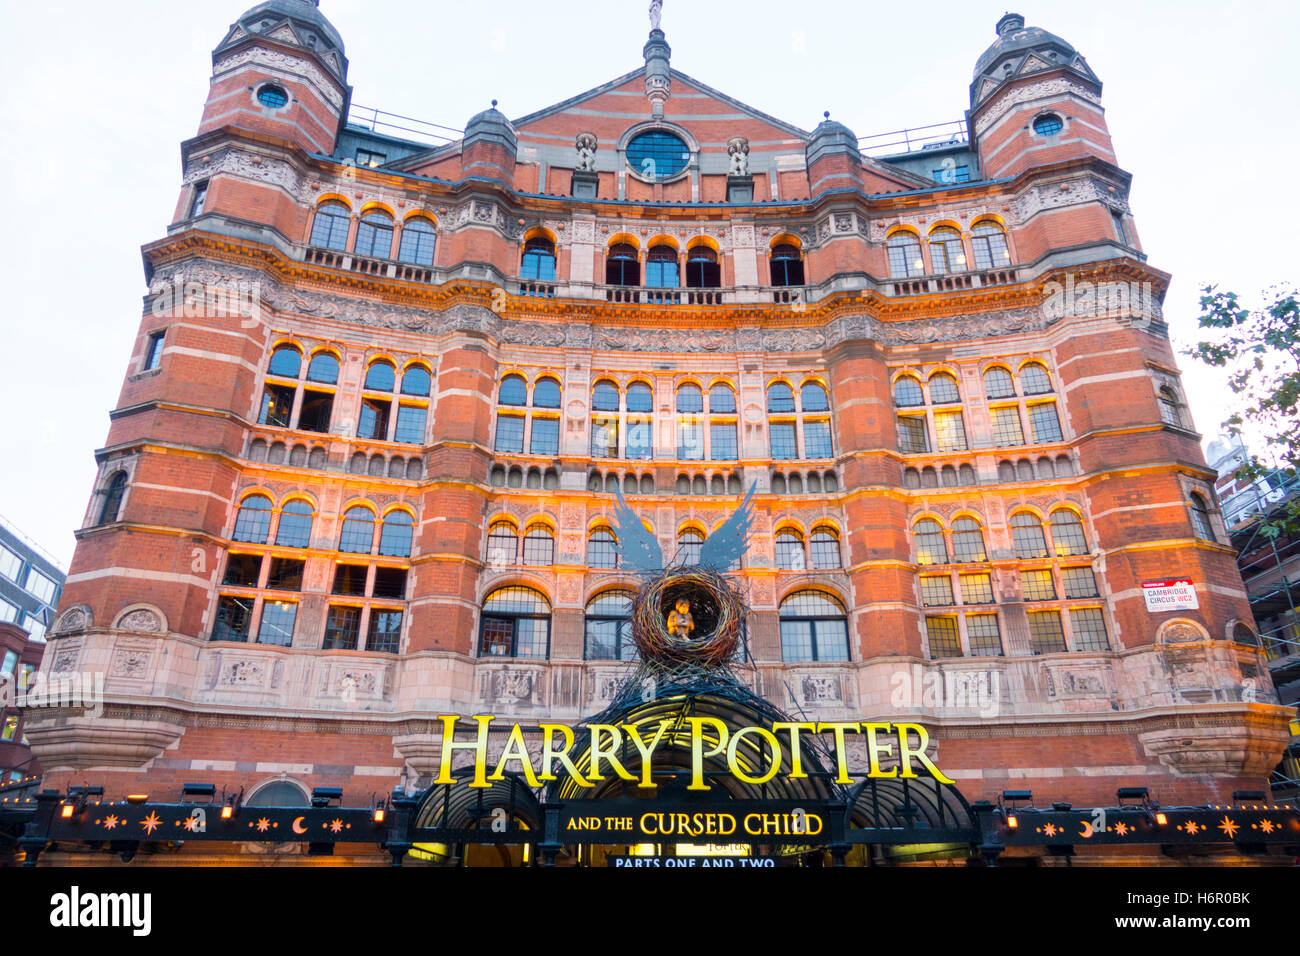 Il famoso Harry Potter musical a Londra al Palace Theatre Cambridge Circus  Foto stock - Alamy